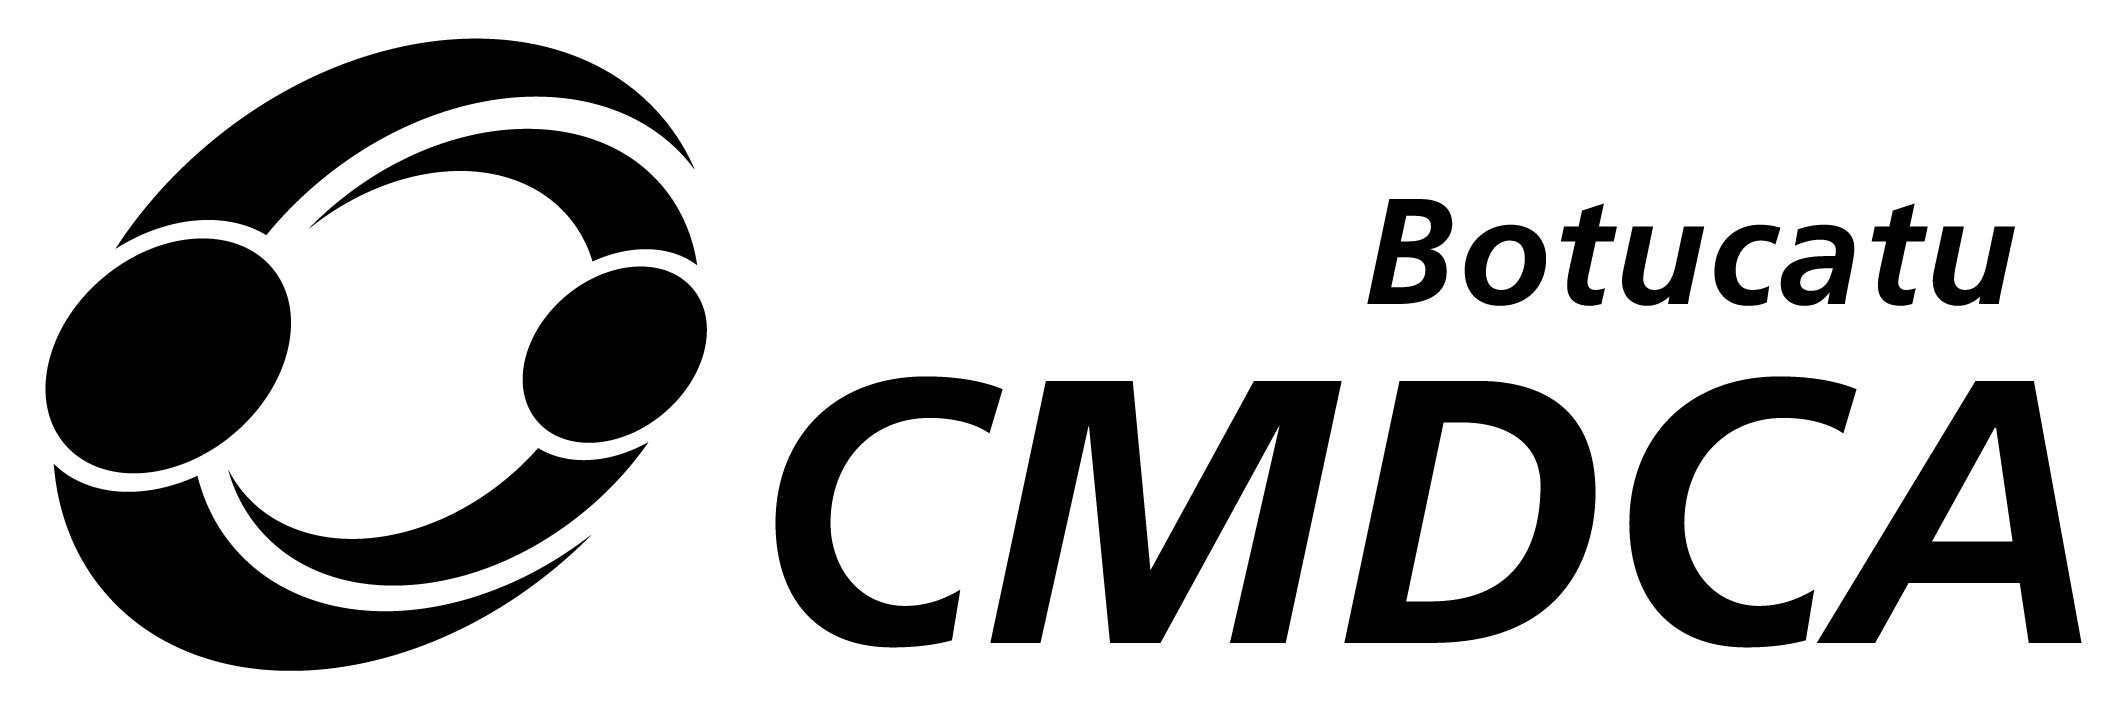 Logo do microchip